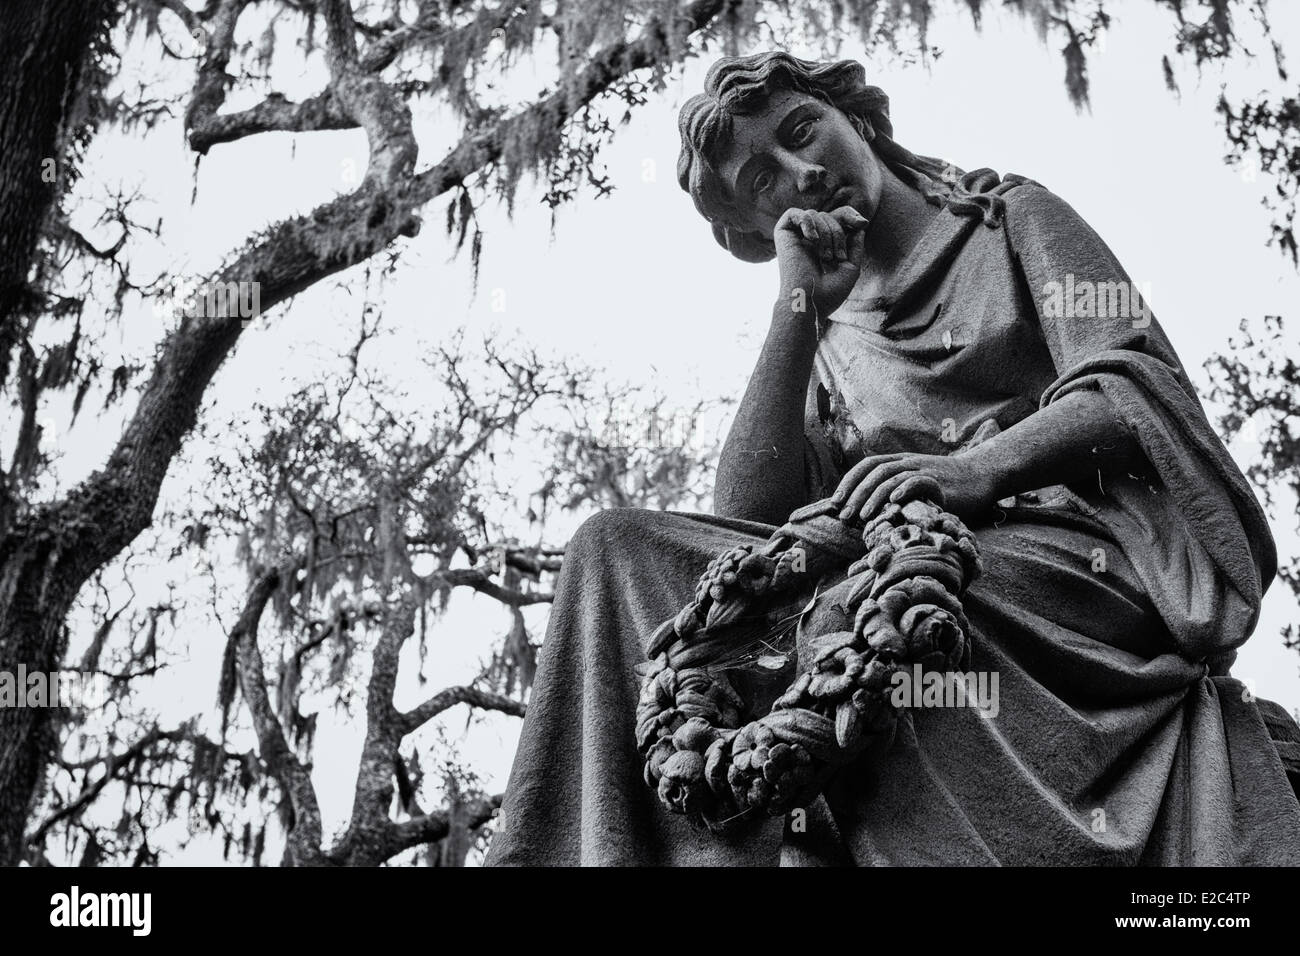 Statue in Bonaventure Cemetery in Savannah, Georgia (Converted to black and white) Stock Photo